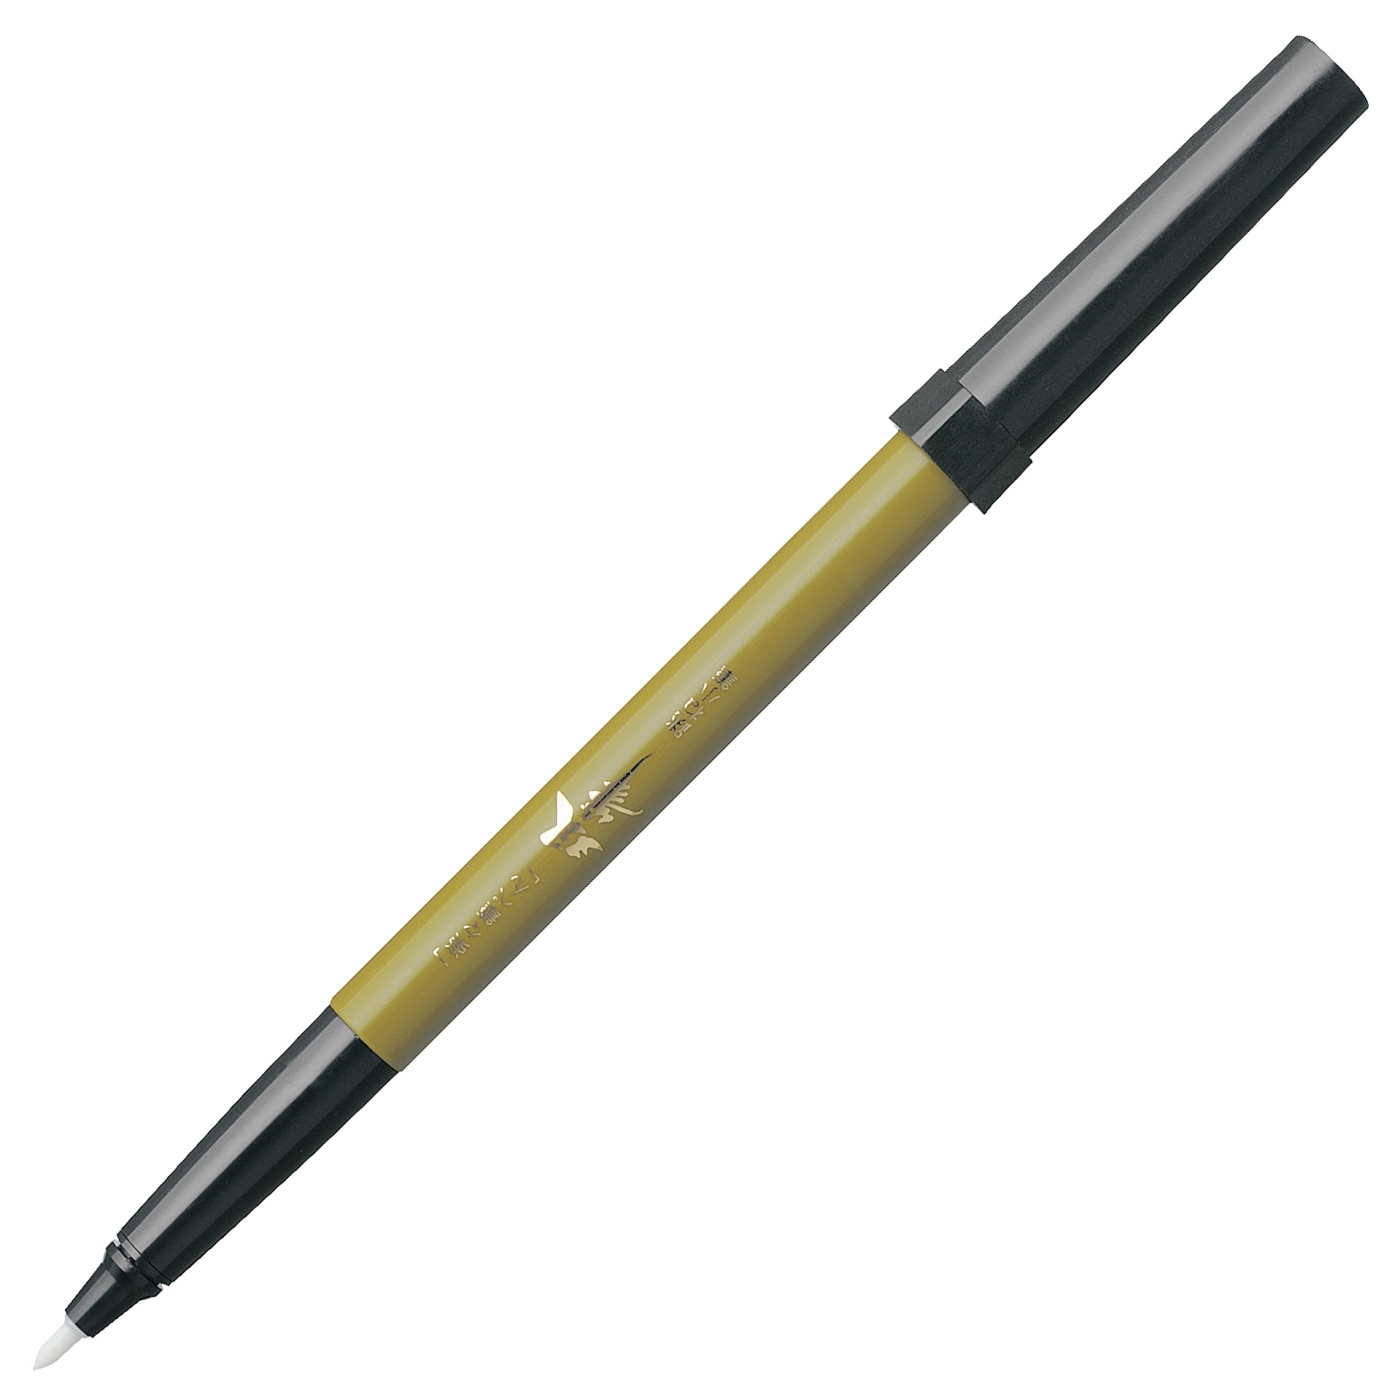 Souhitsu CFS-580 Brush pen in the group Pens / Artist Pens / Brush Pens at Pen Store (109769)